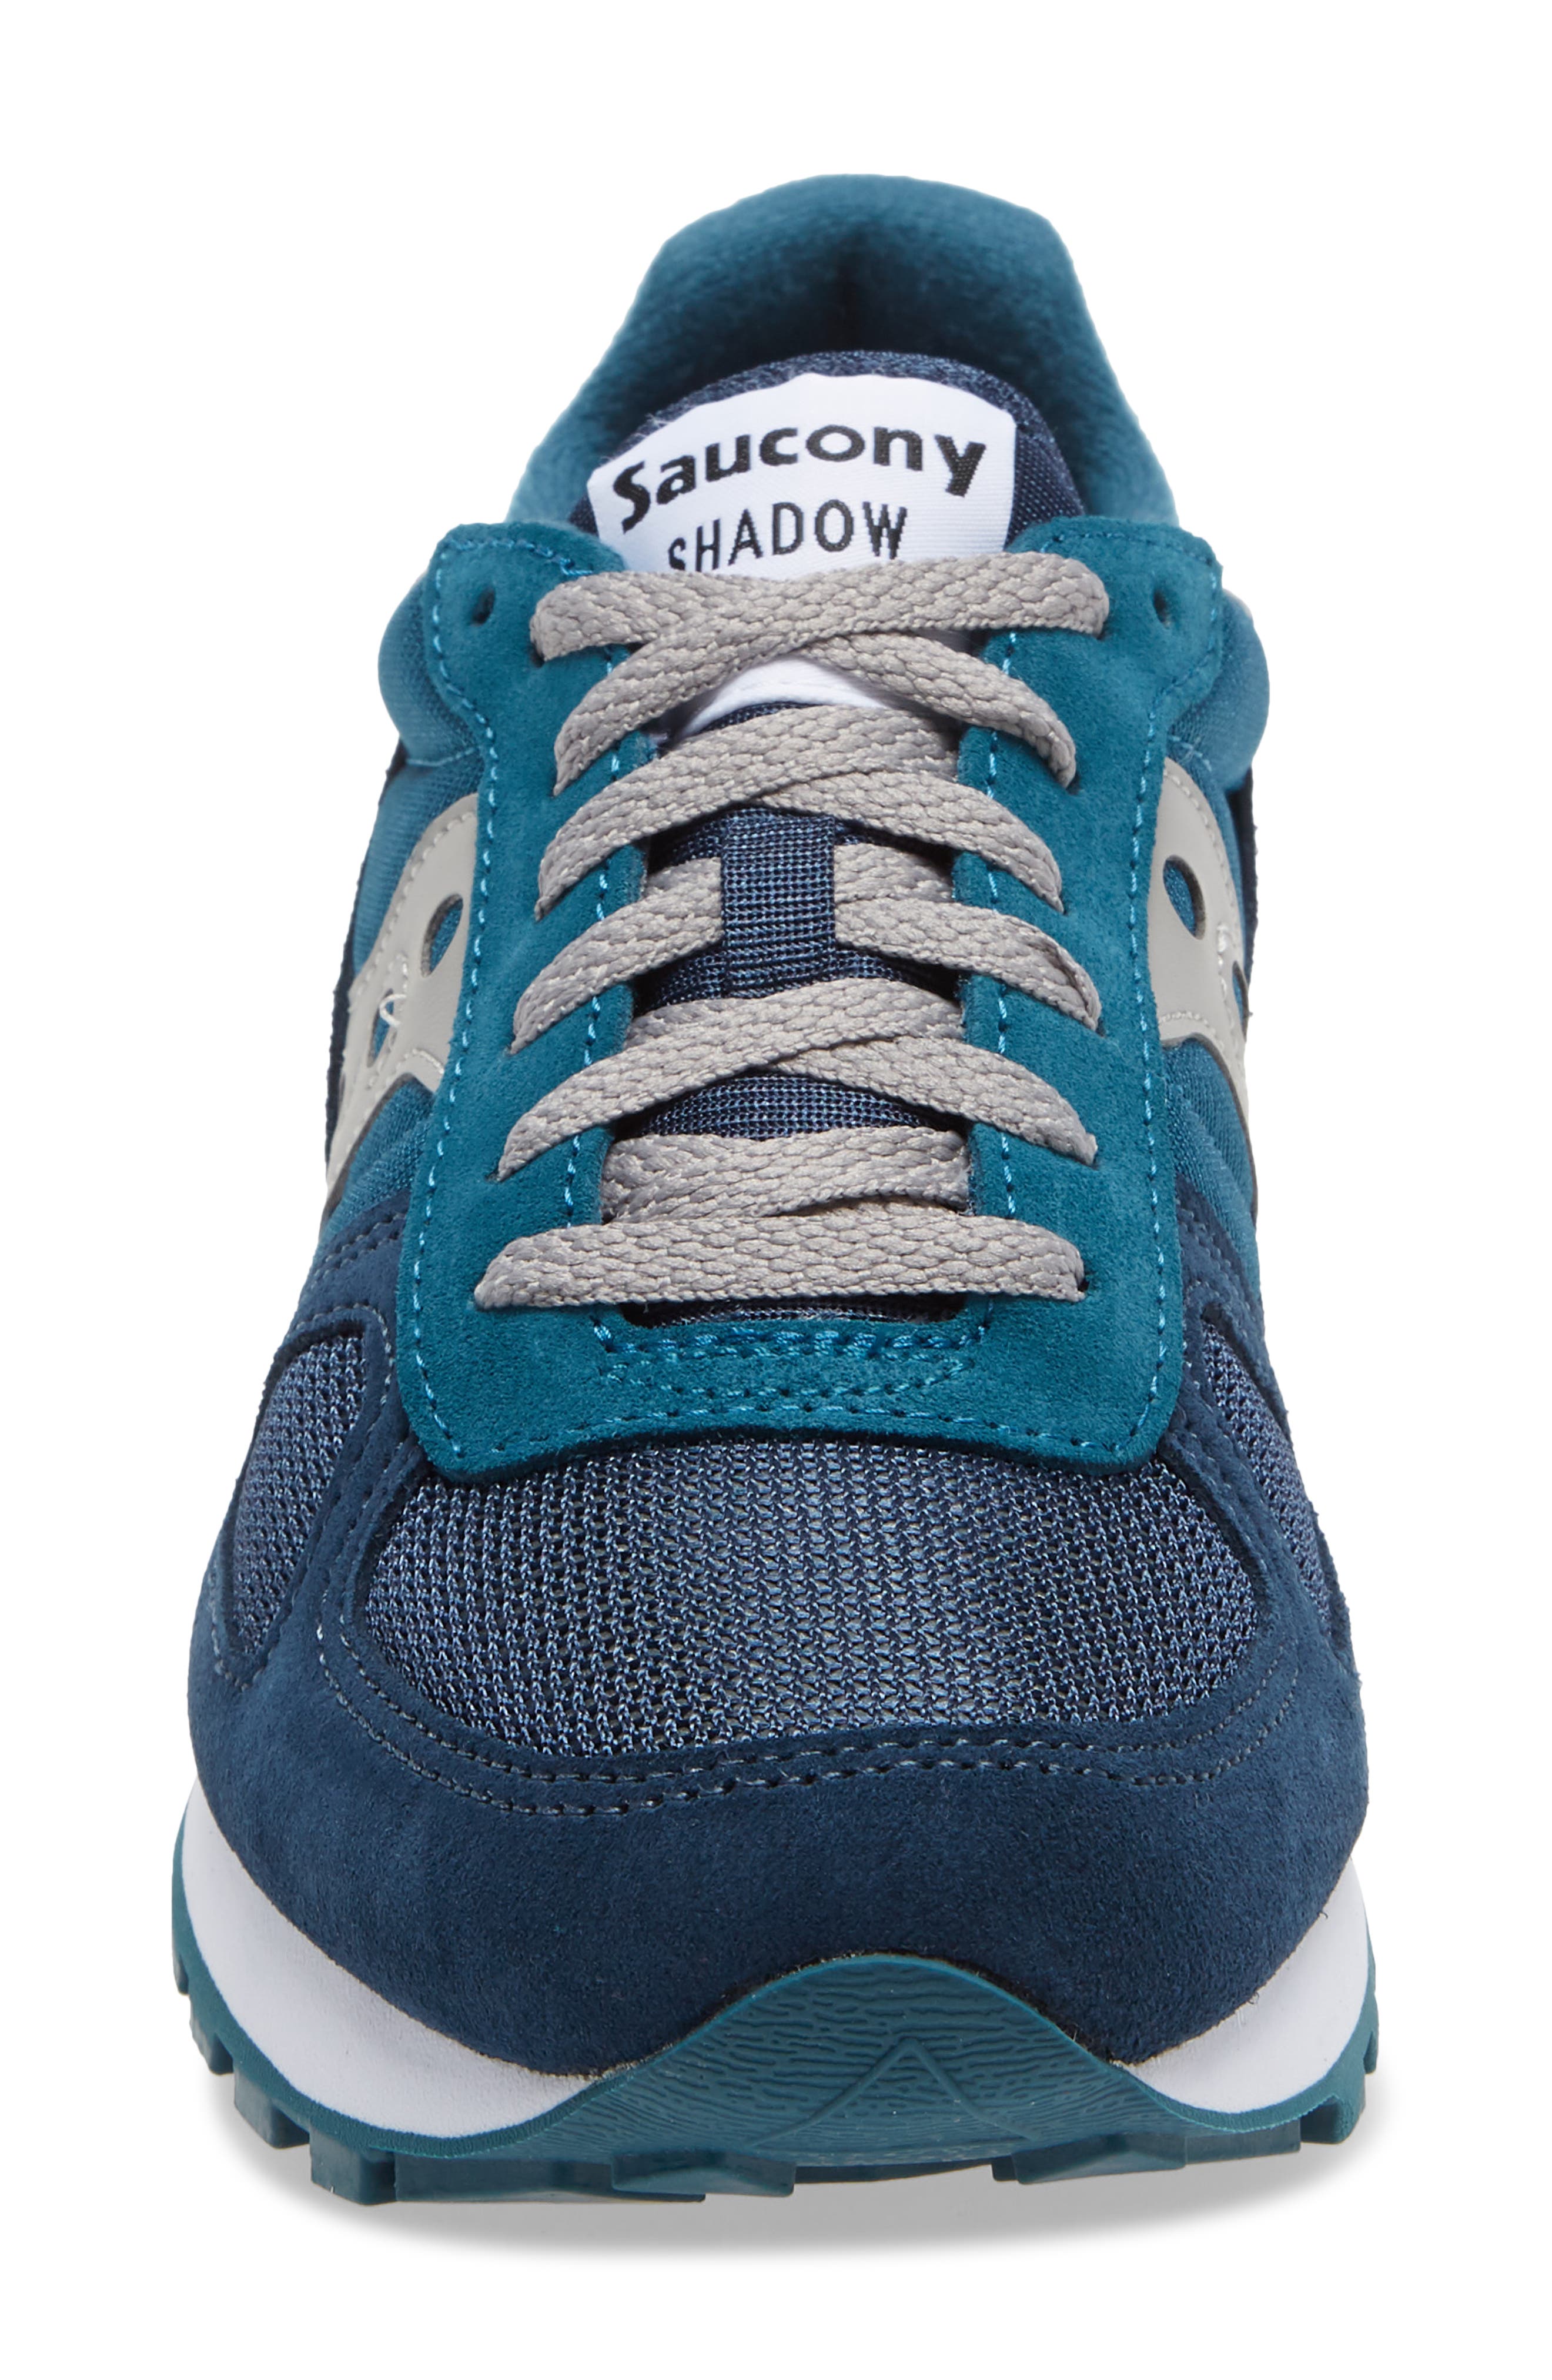 saucony shadow sneakers